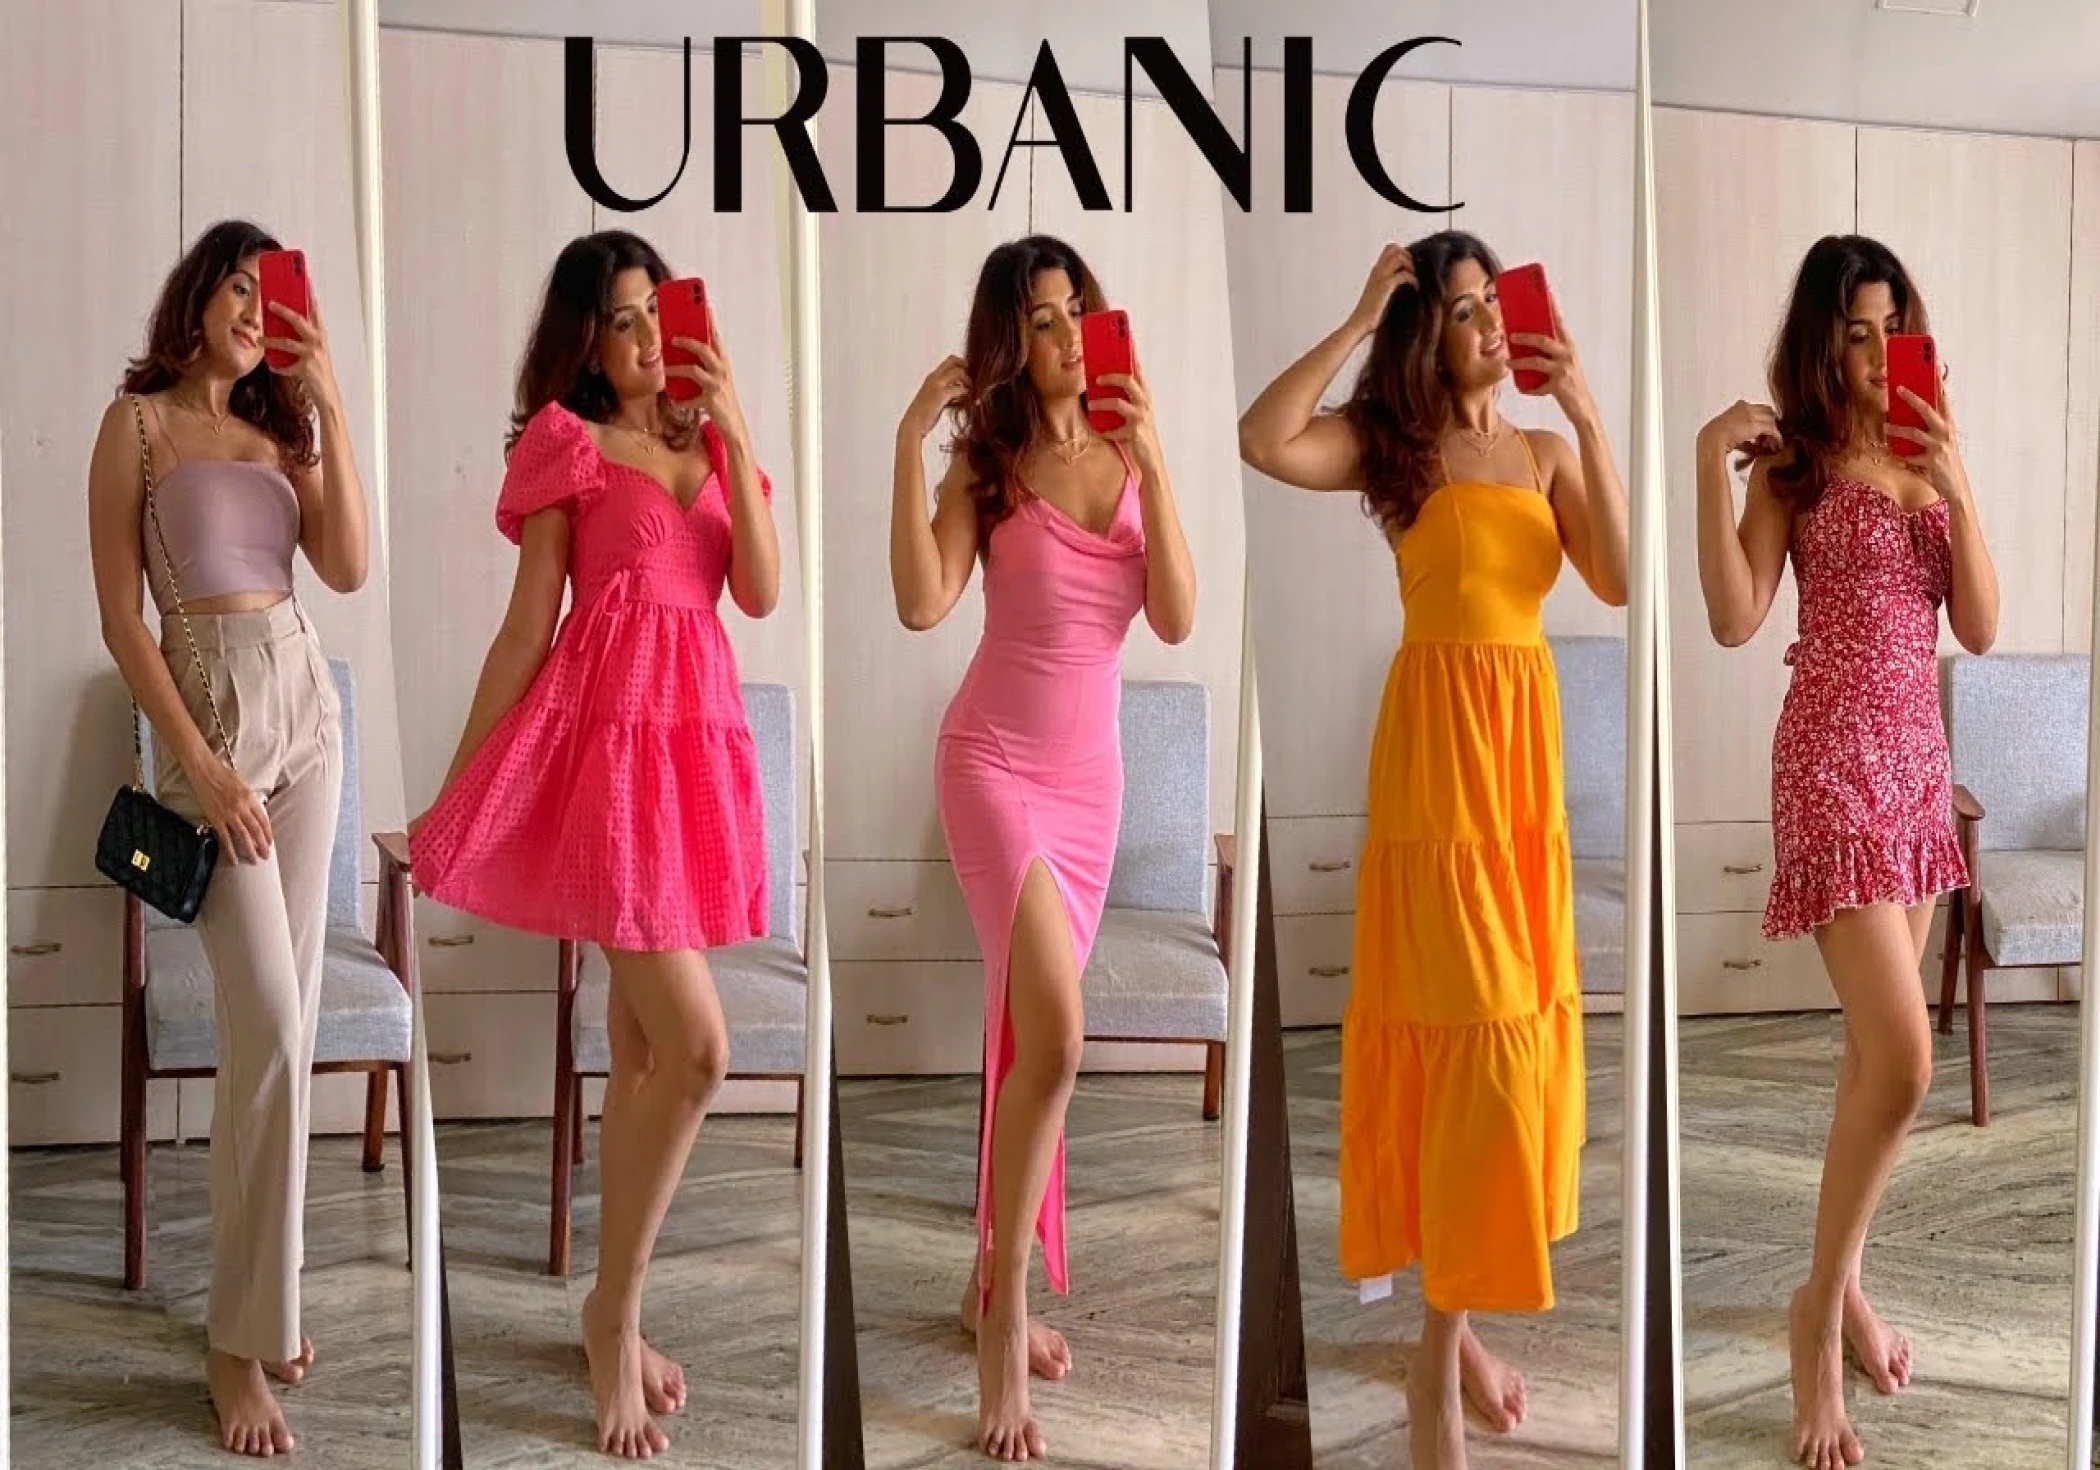 Urbanic Scores $150 Million to Revolutionize Fashion with AI, Ethics, and Style